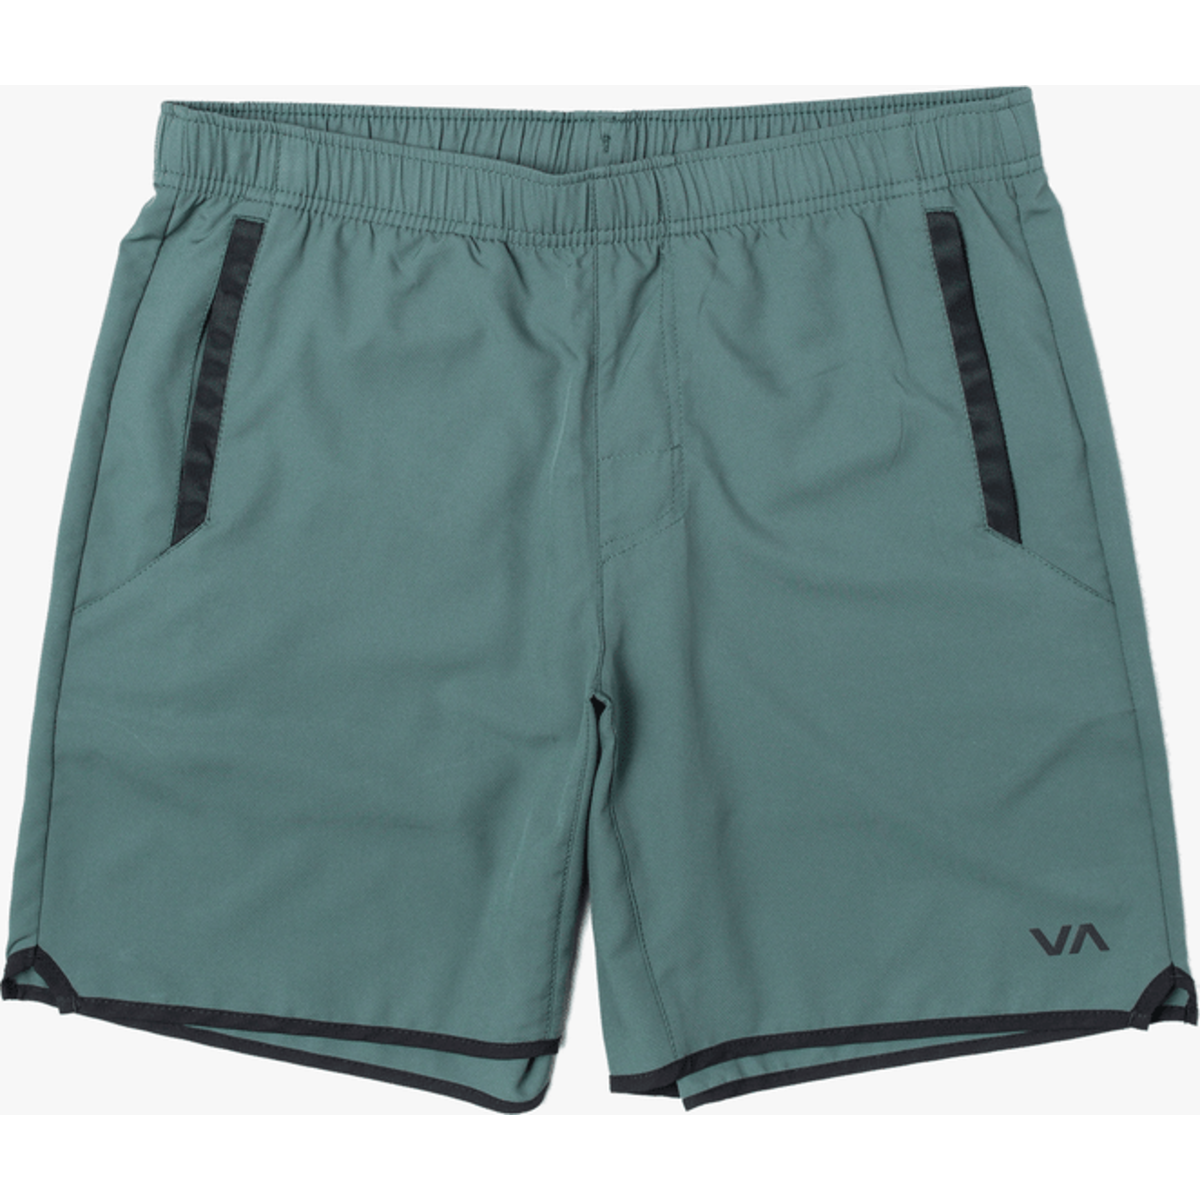 RVCA Men's Yogger IV Shorts